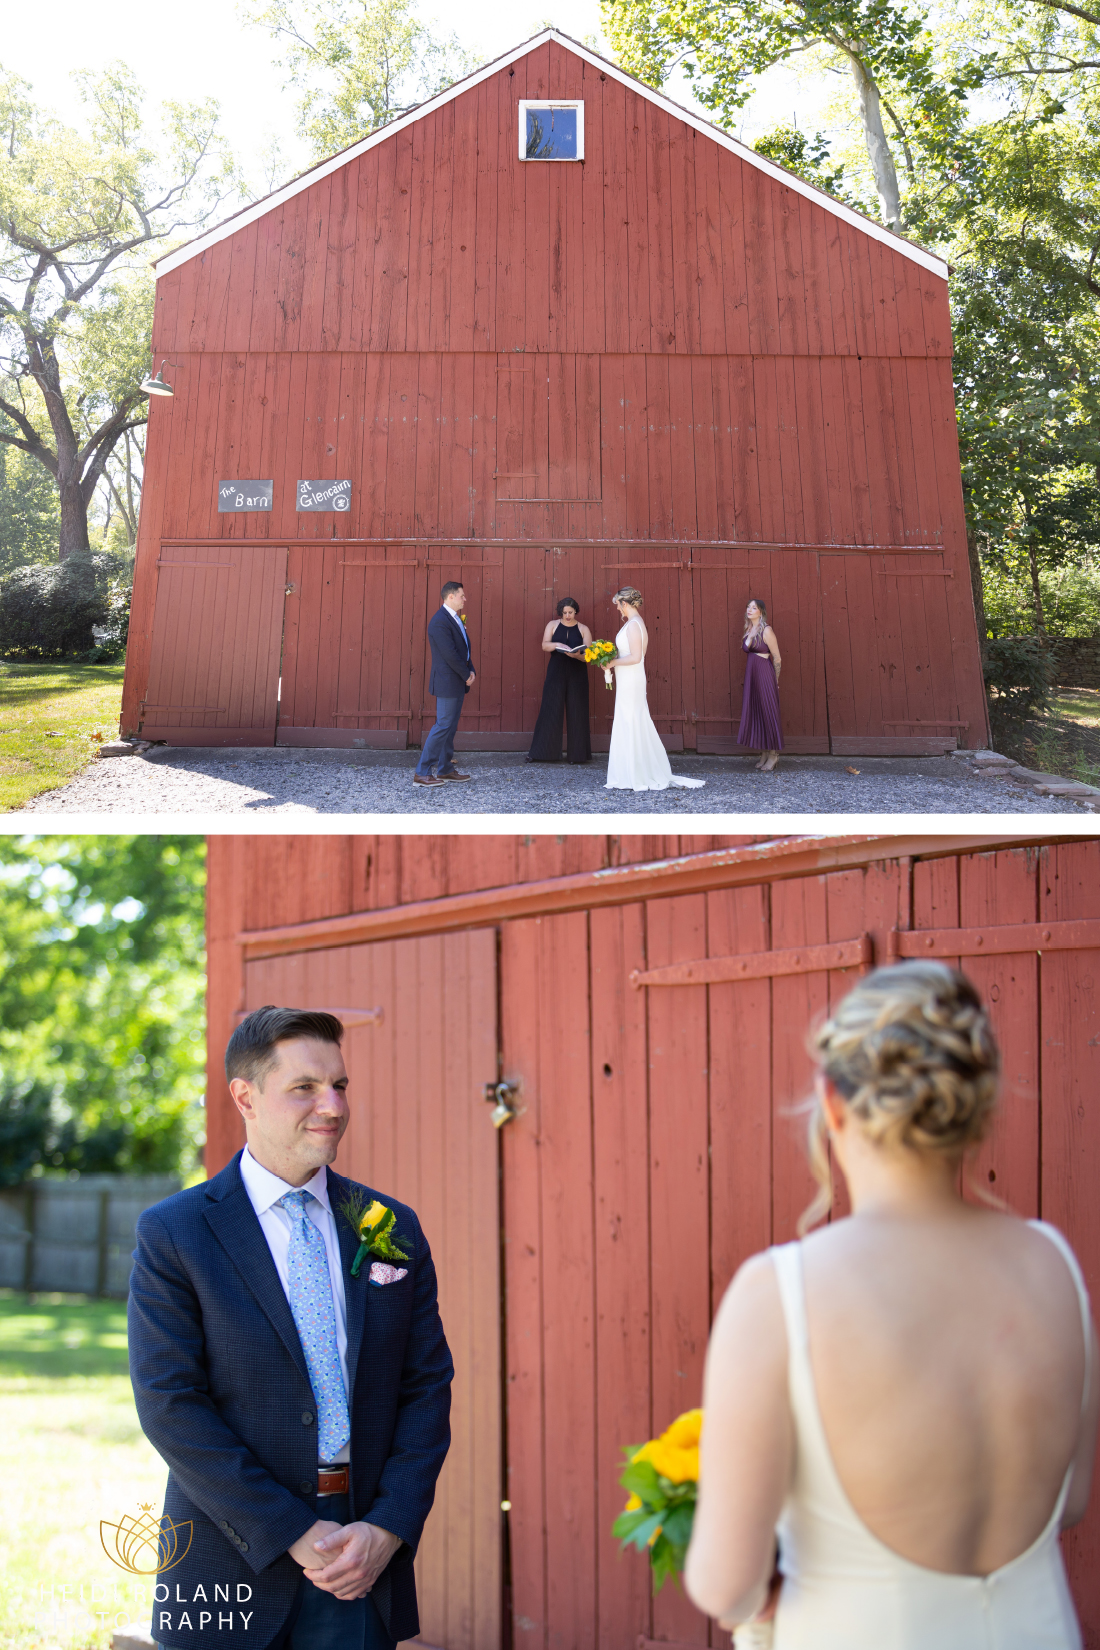 Wedding ceremony at The Inn at Glencairn Princeton NJ